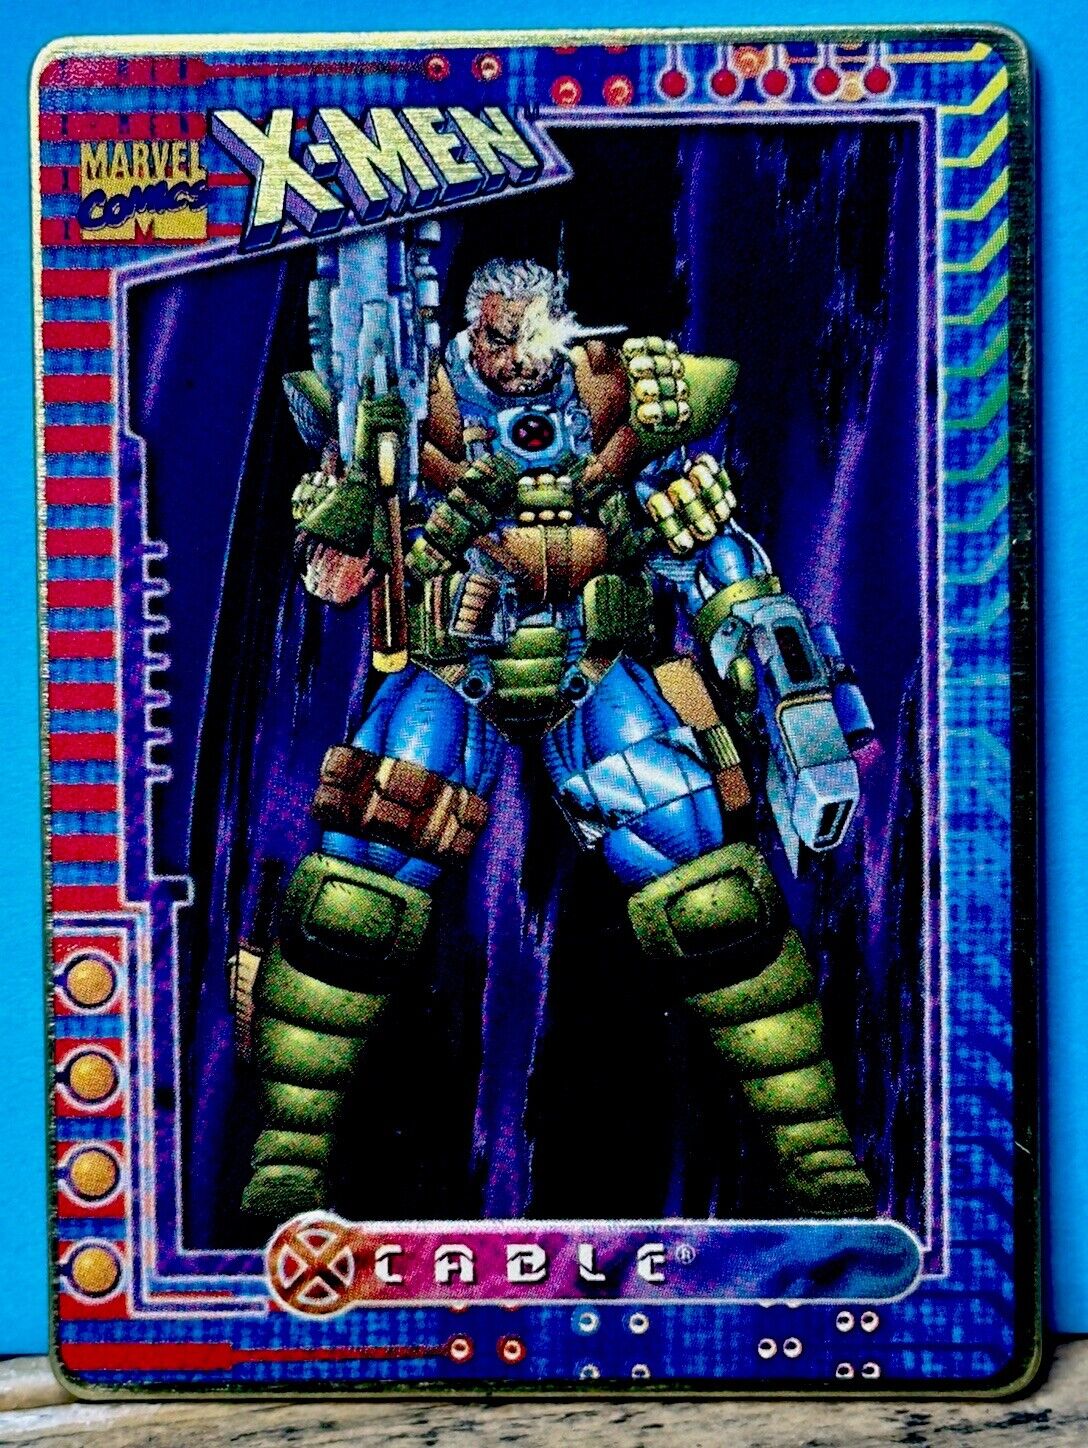 RARE X-Men MARVEL METAL CARD Cable  /12000 SSP - GOLD 90’s Metal